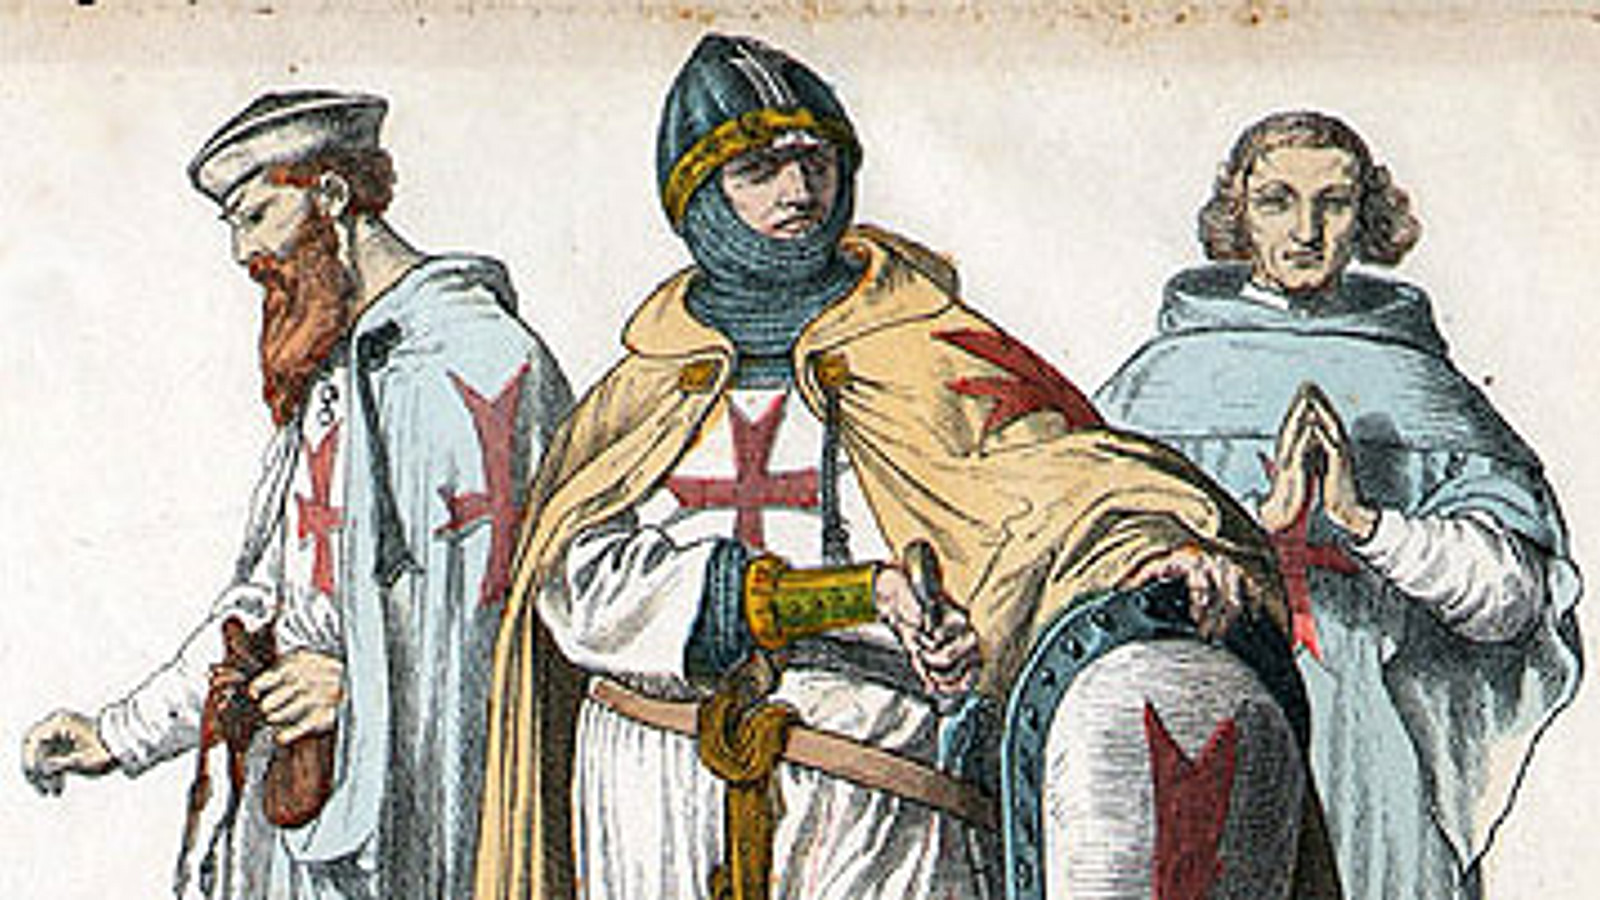 Knights Templar - World History Encyclopedia